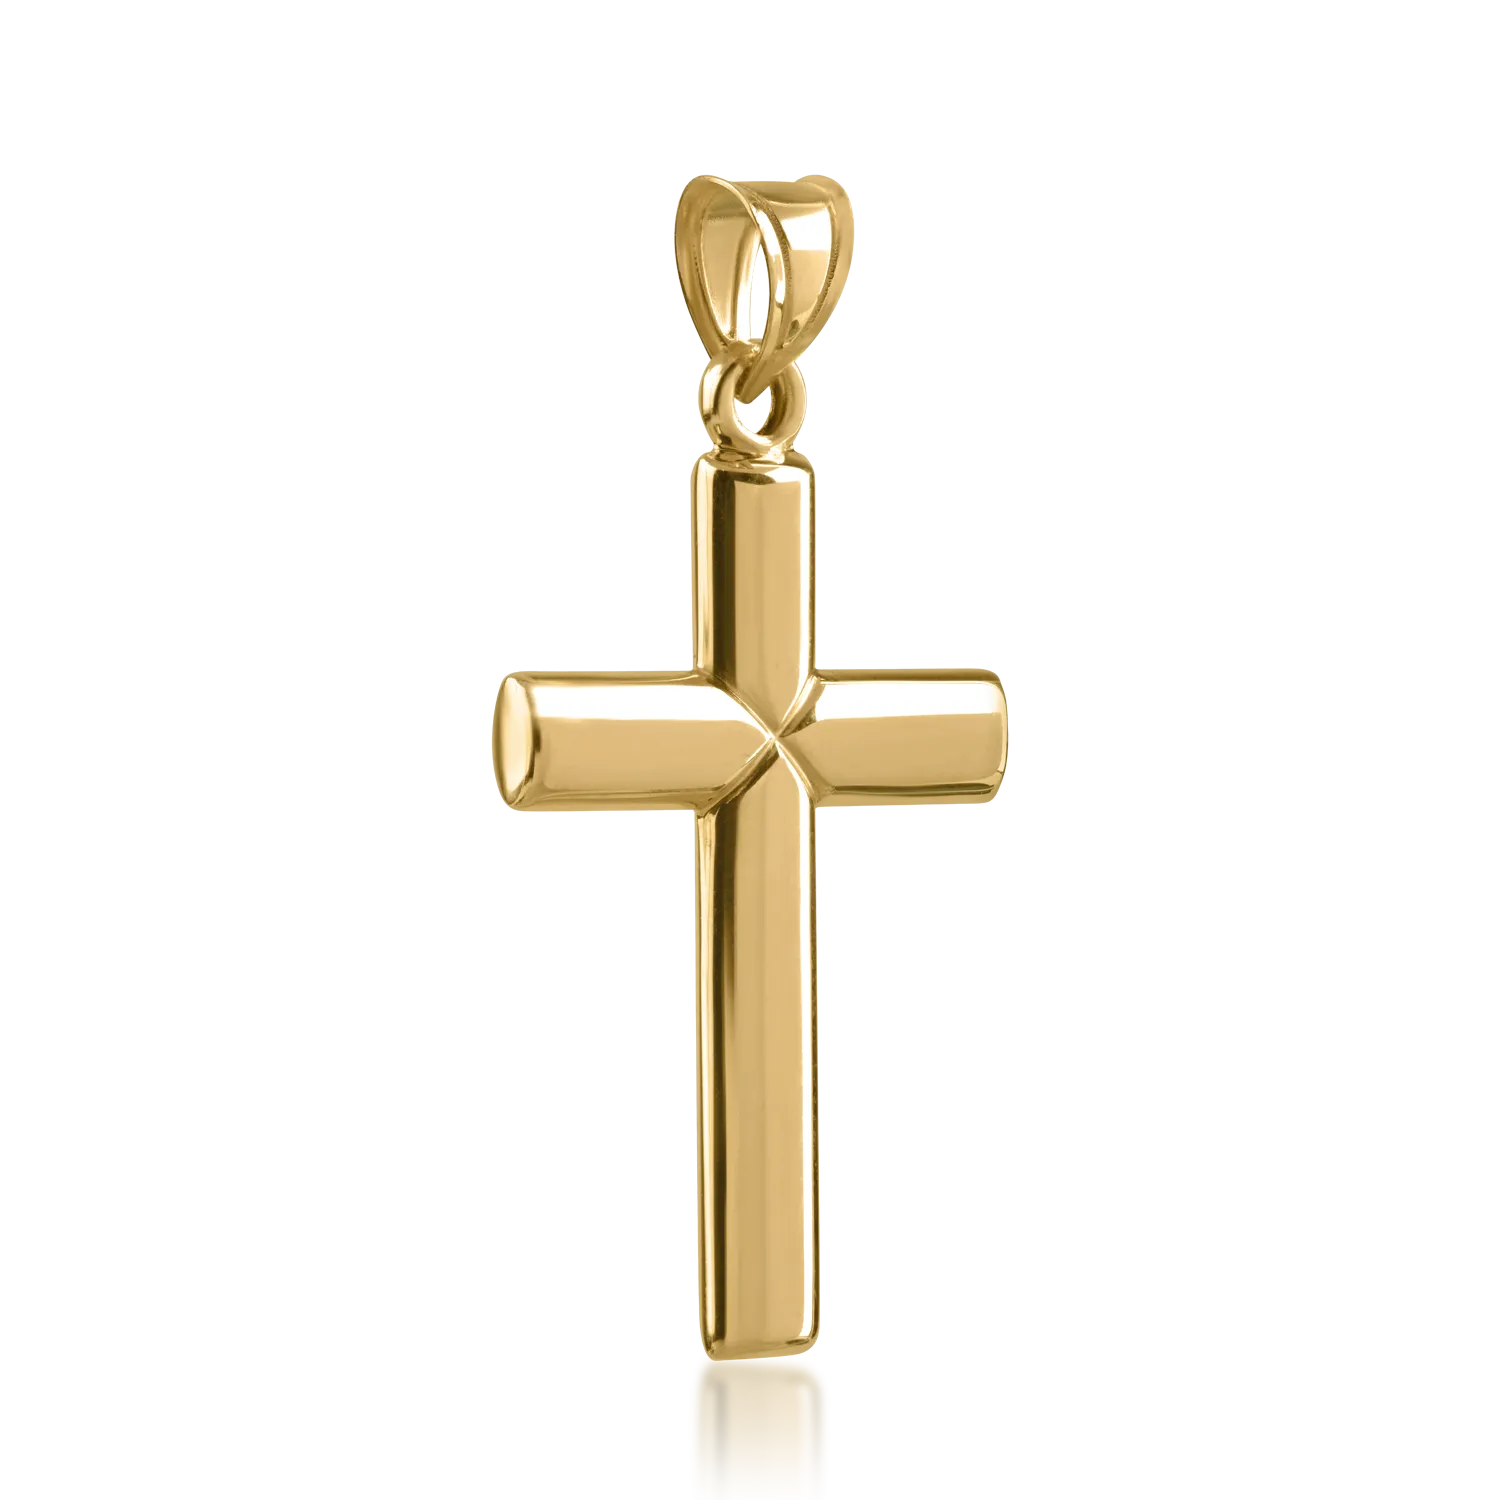 Yellow gold cross pendant